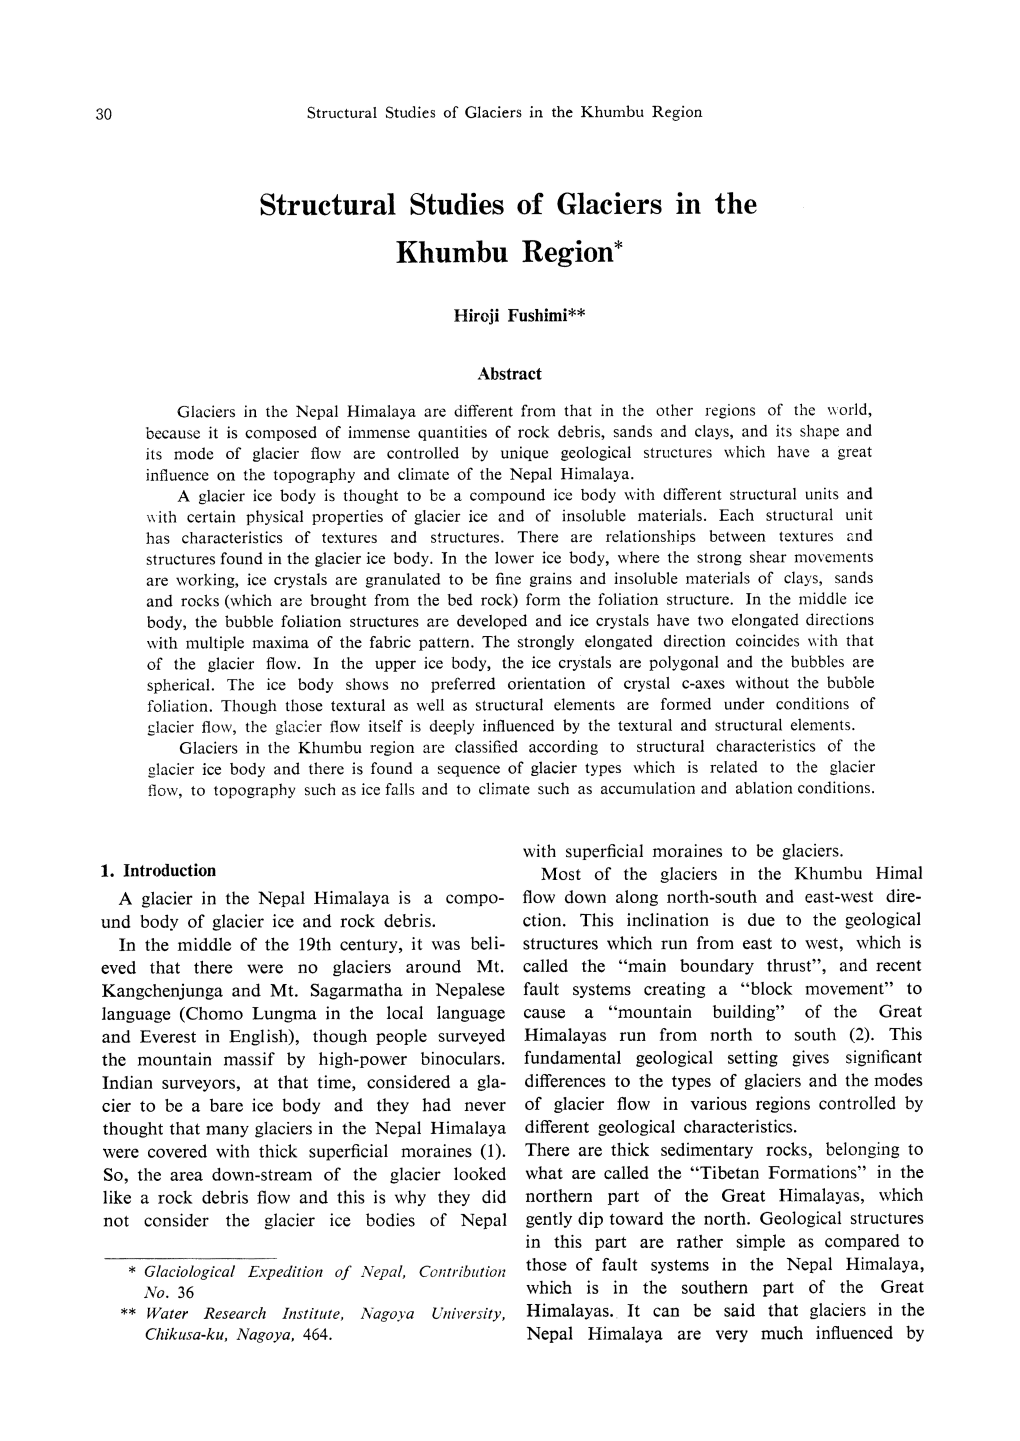 Structural Studies of Glaciers in the Khumbu Region*